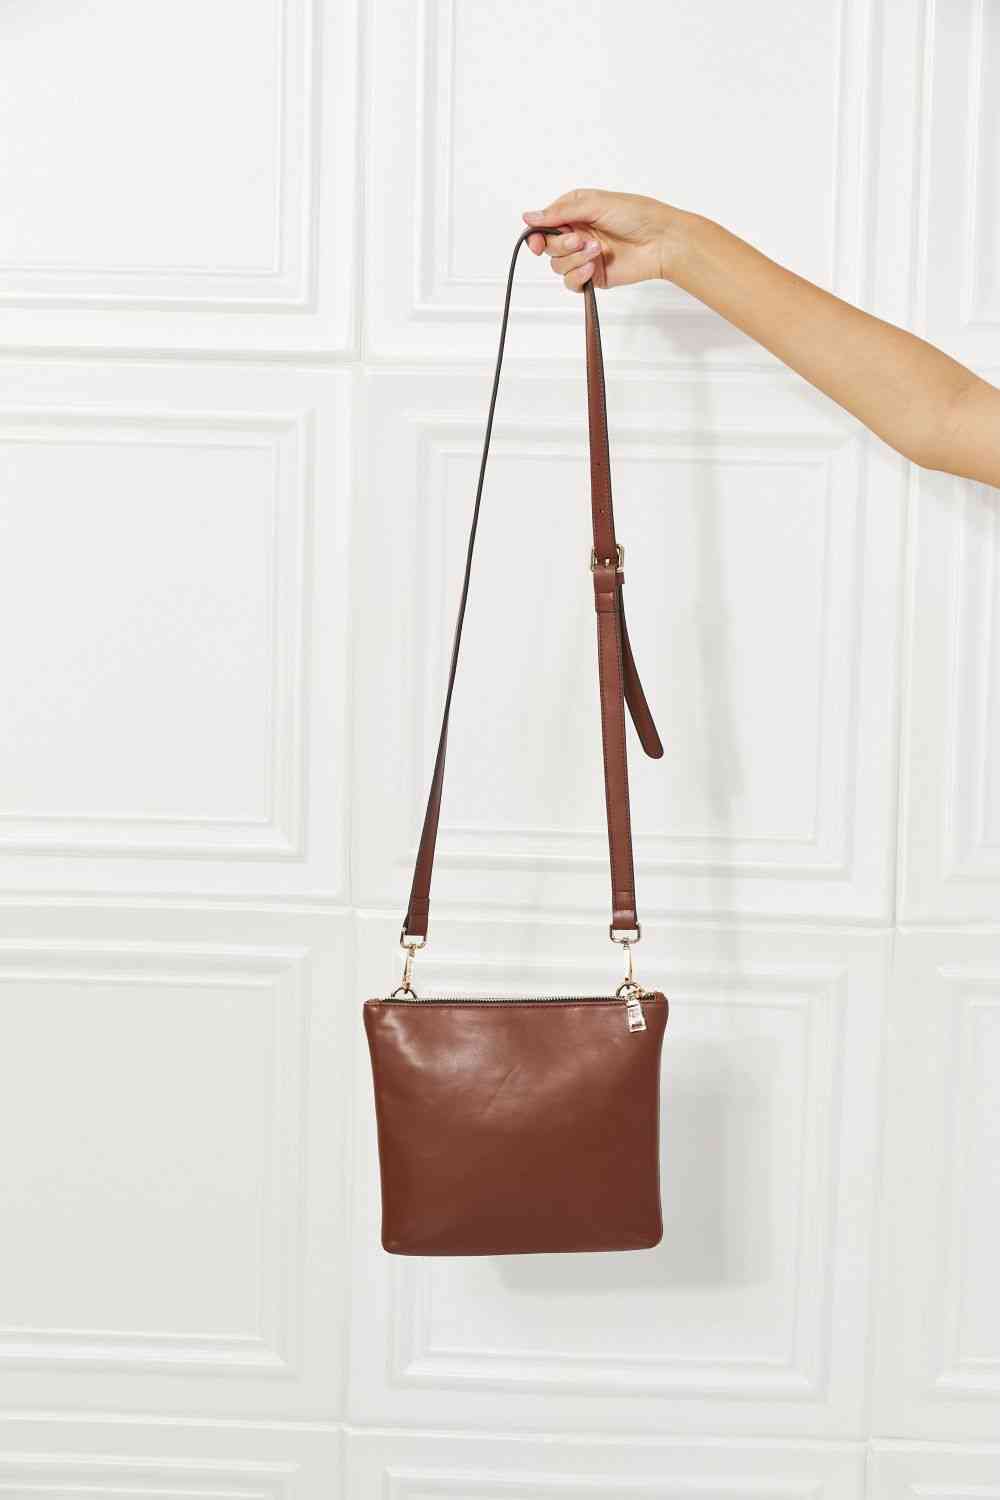 TEEK - NL All Day Everyday Handbag BAG TEEK Trend   